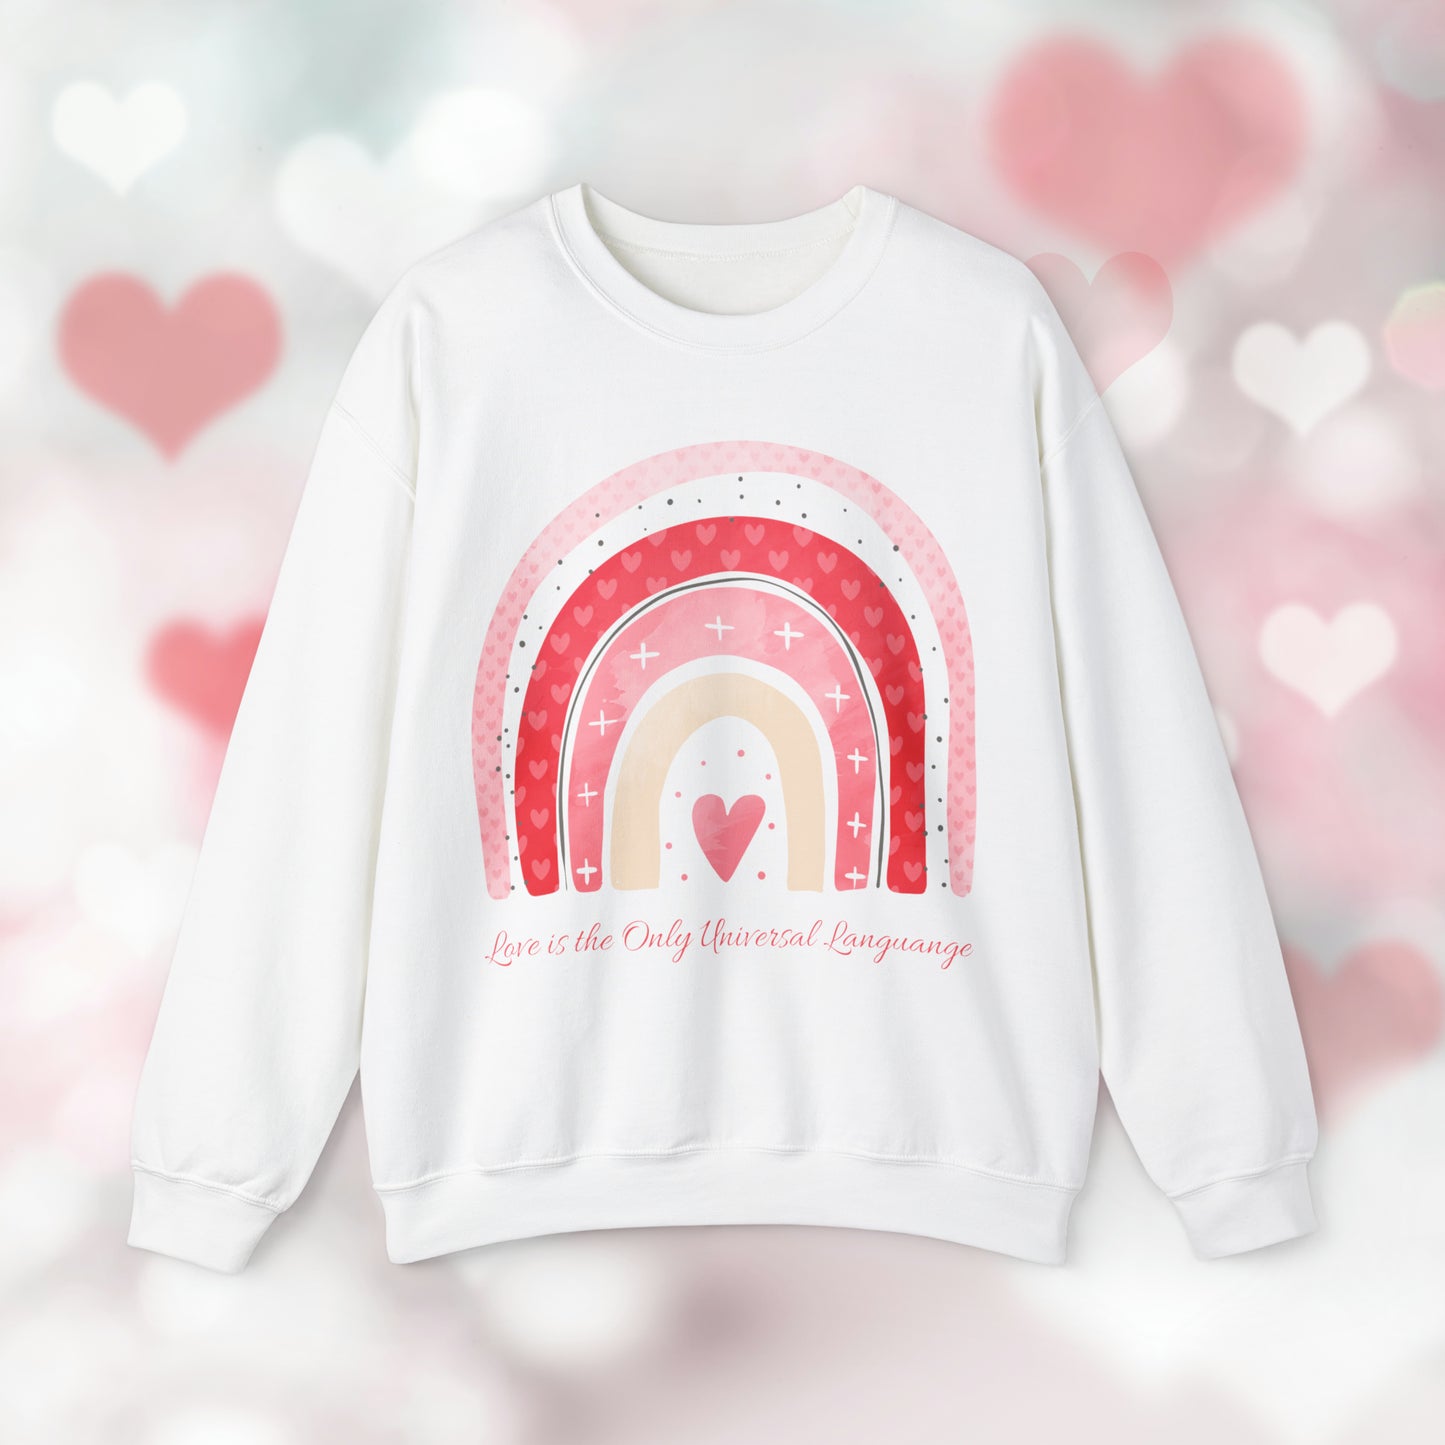 Love is the Only Universal Language: Crewneck Sweatshirt